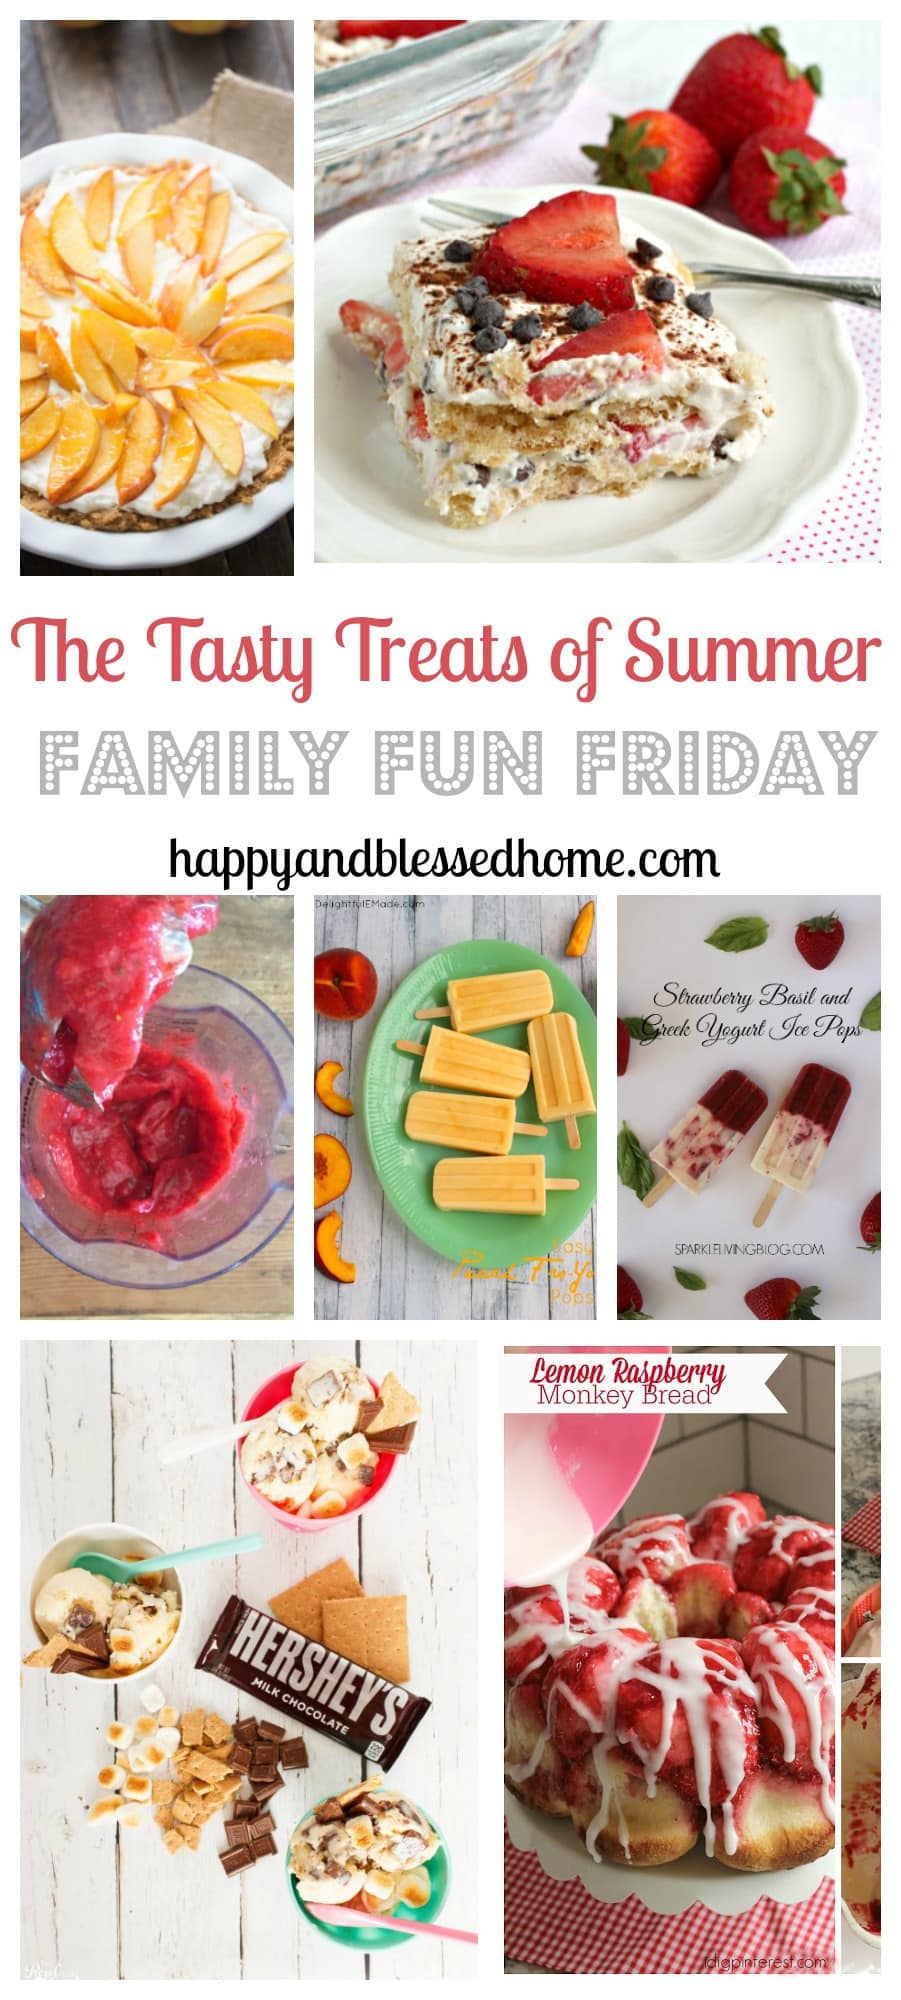 The Tasty Treats of Summer on Family Fun Friday